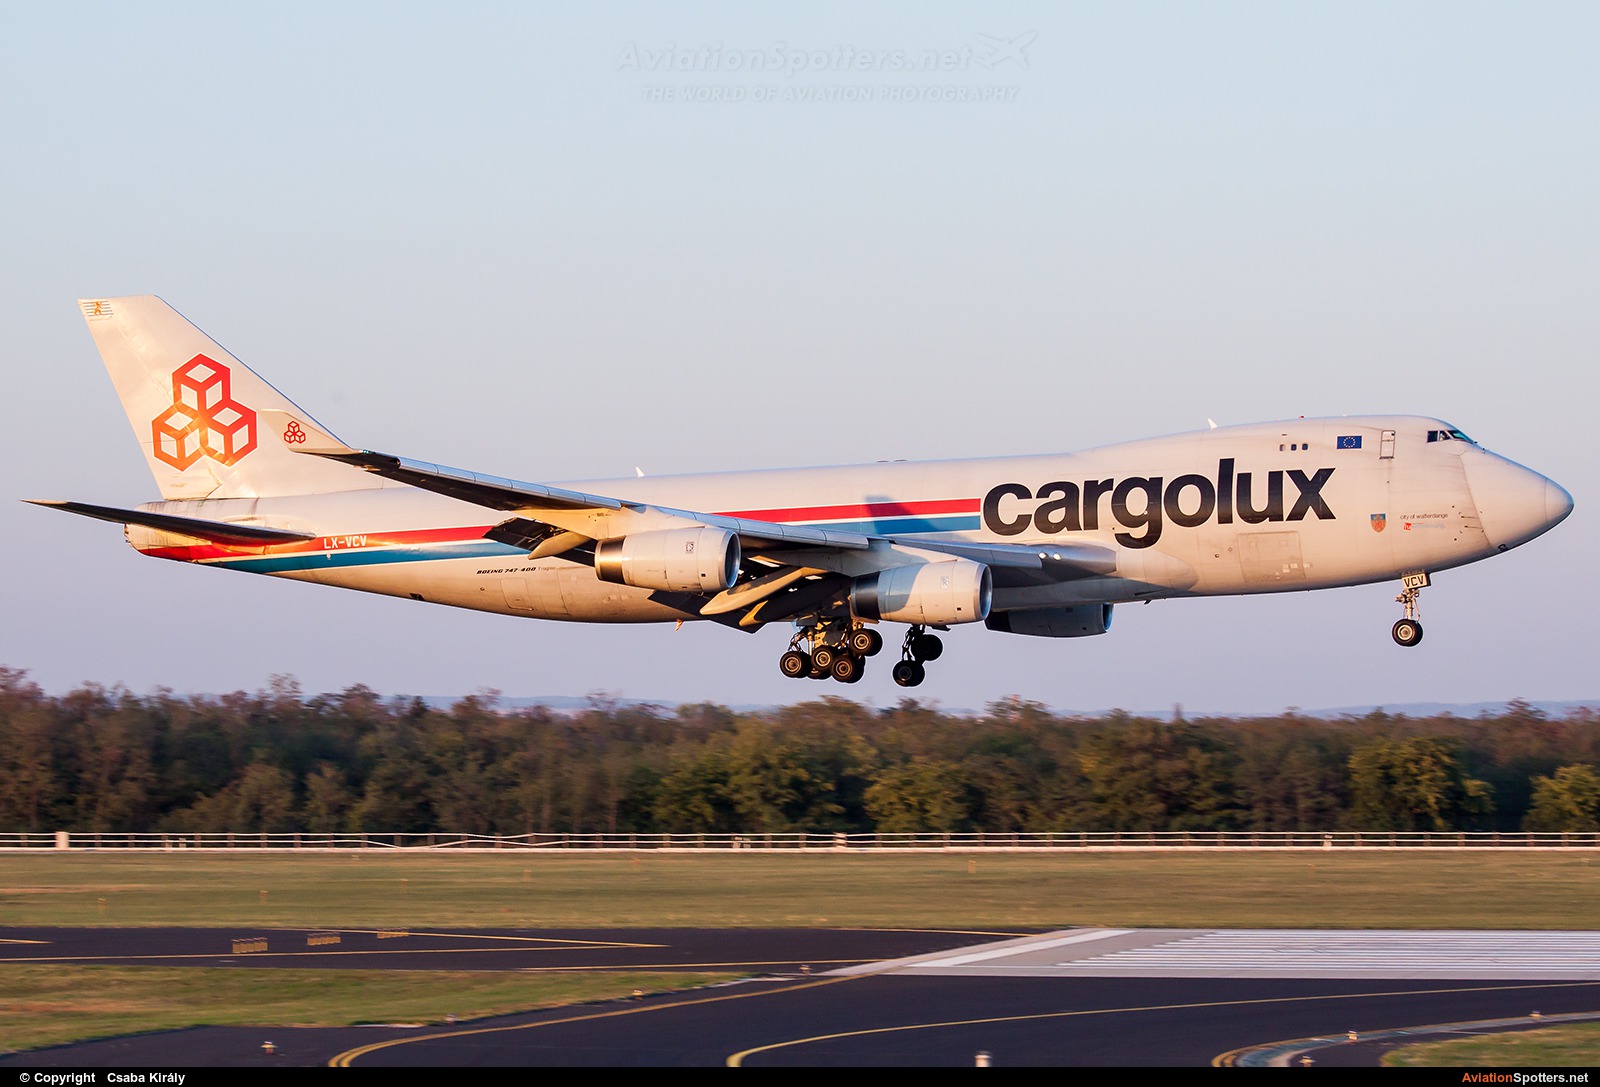 Cargolux  -  747-400F  (LX-VCV) By Csaba Király (Csaba Kiraly)